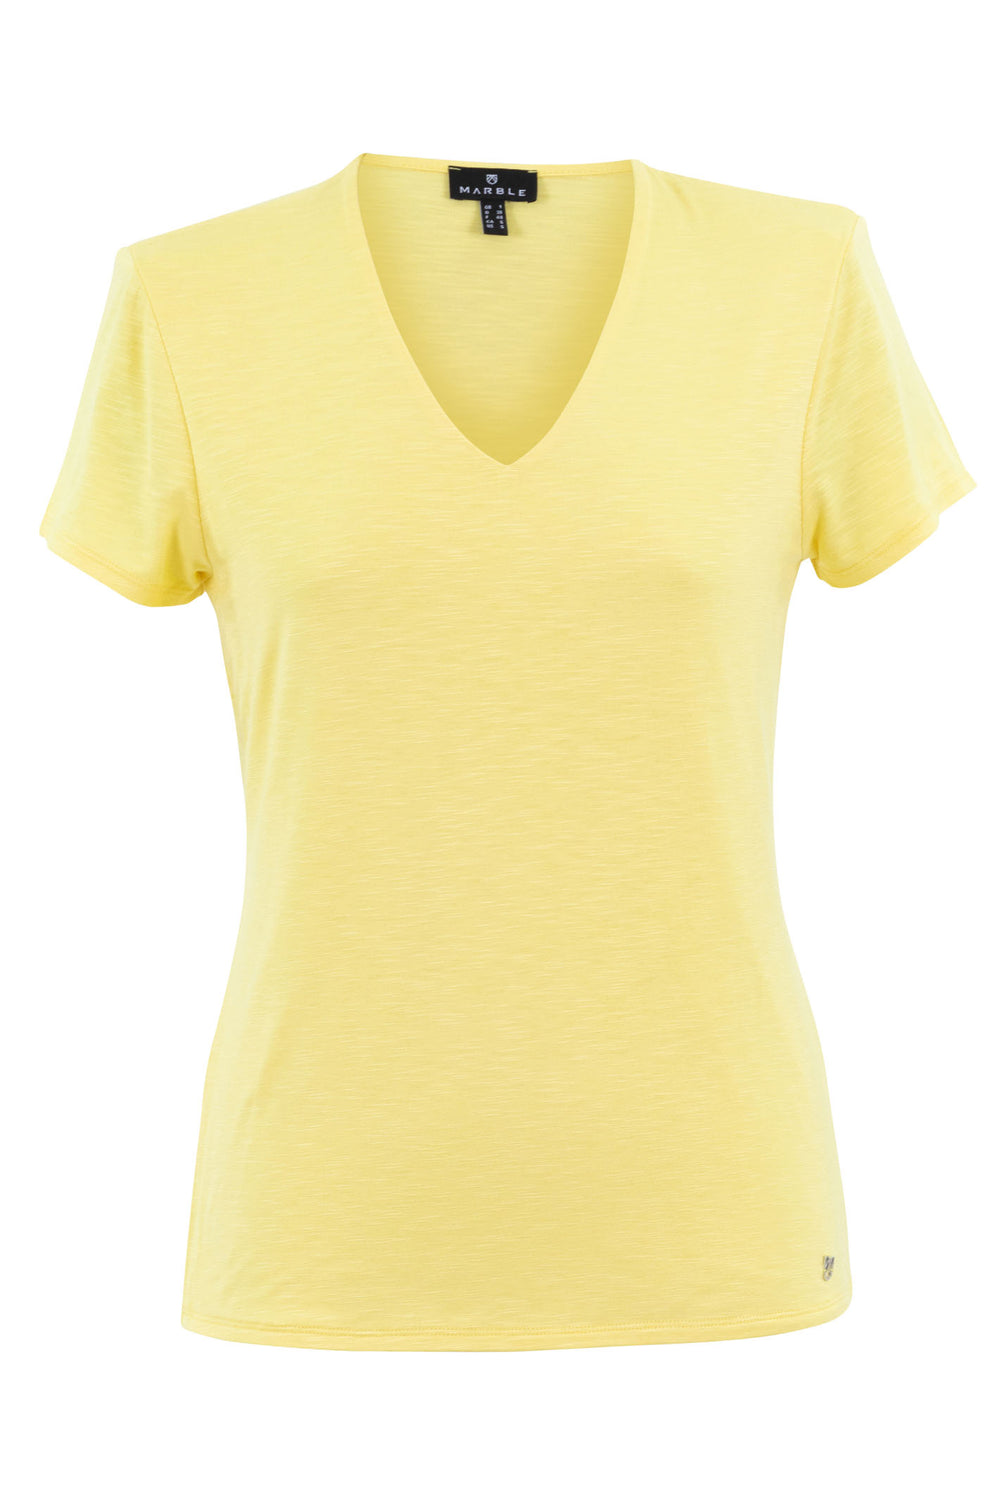 Marble 6539 152 Lemon Yellow V-Neck T-Shirt Top - Dotique